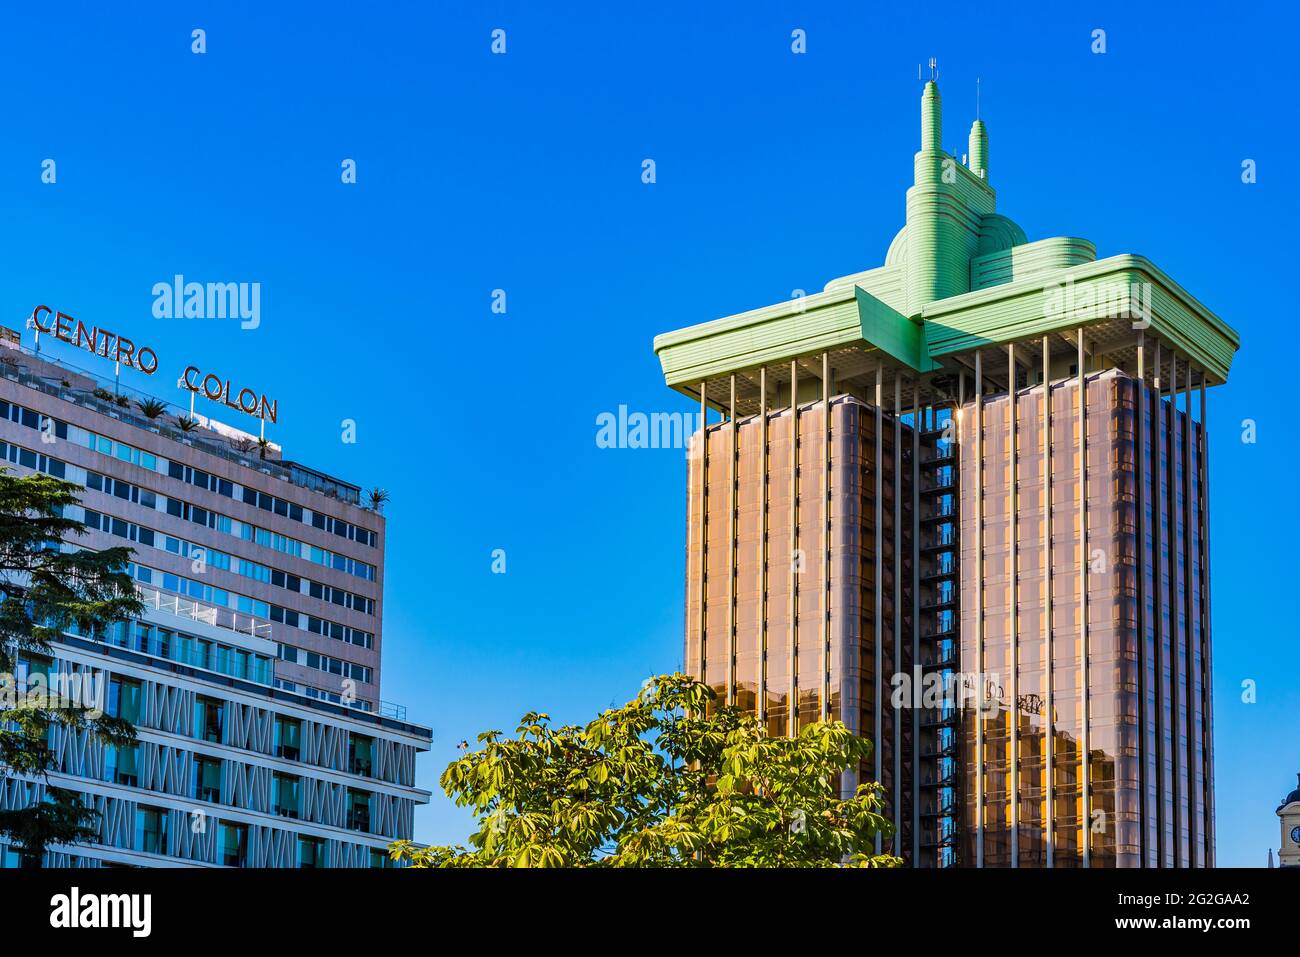 Columbus Towers o Torres de Colón è un alto edificio di uffici composto da due torri gemelle situato in Plaza de Colón a Madrid. L'edificio constru Foto Stock